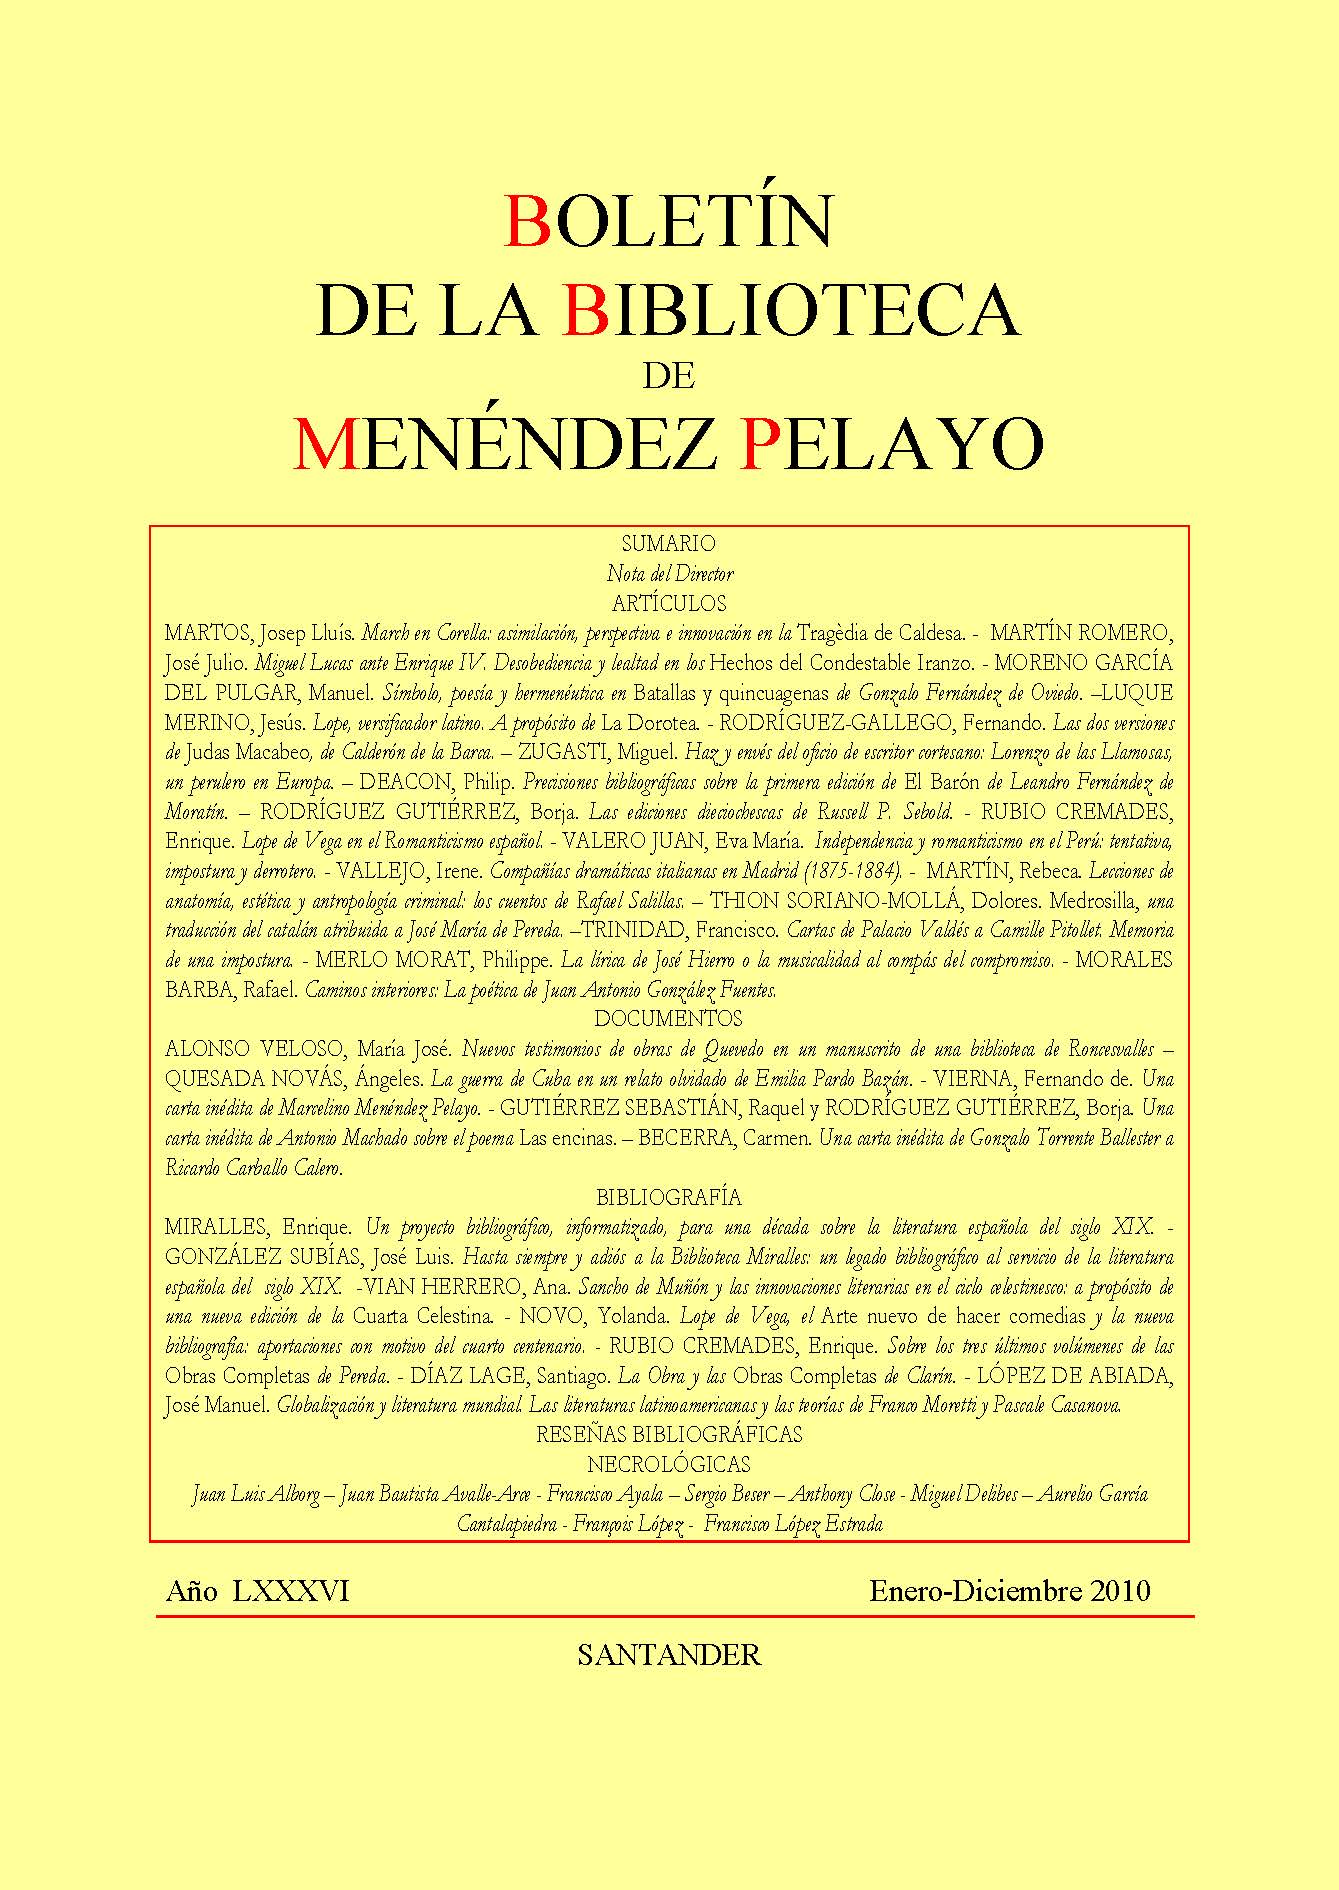 					Ver Vol. 86 Núm. Único (2010): Boletín de la Biblioteca de Menéndez Pelayo. LXXXVI. 2010
				